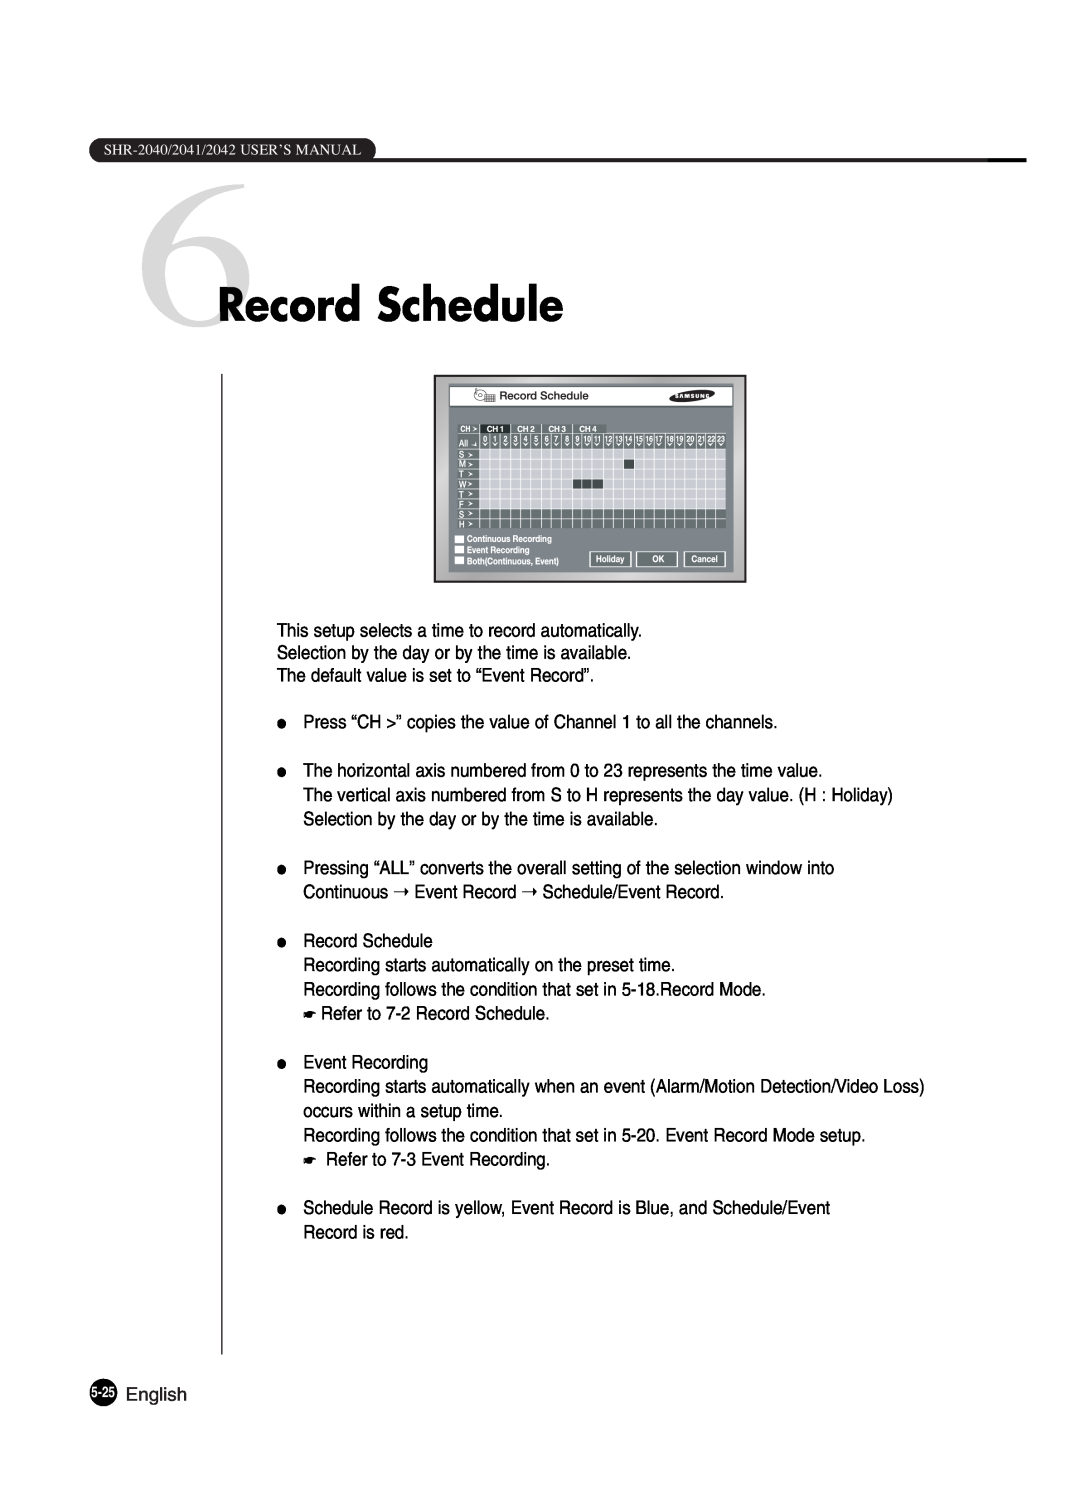 Samsung SHR-2042P250, SHR-2040P250 manual 6Record Schedule, English 